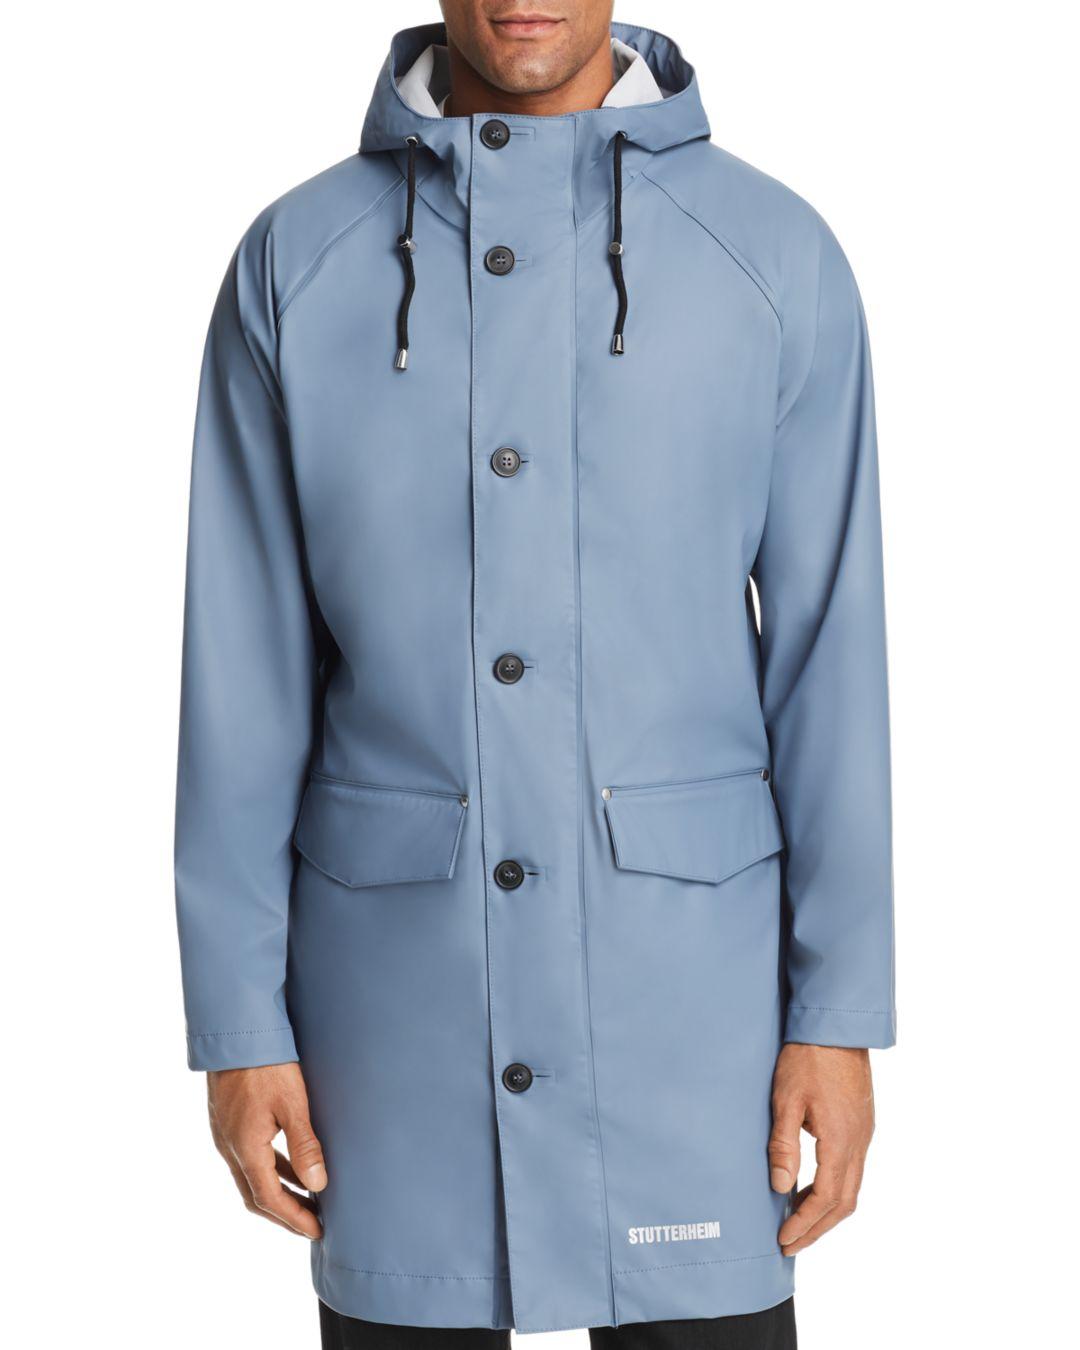 Stutterheim Ekeby Lightweight Rain Jacket in Blue for Men - Lyst